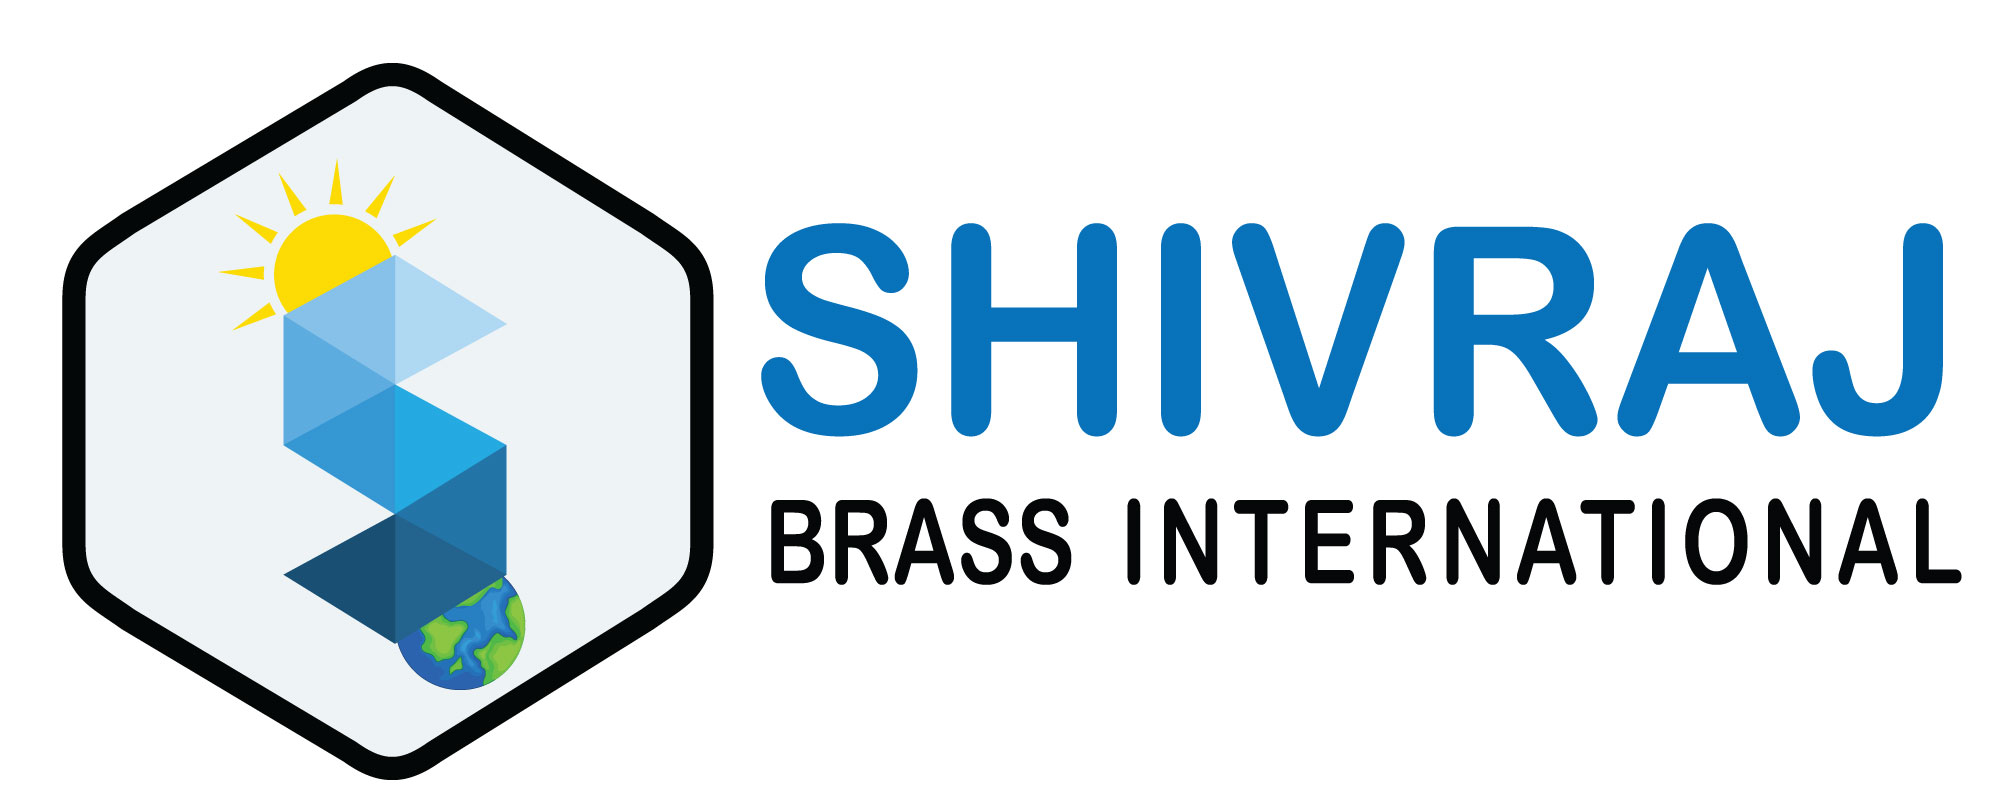 Brass Inserts, Brass Fasteners, Precision Turned Brass Components Manufacturer, Exporter | Shivraj Brass International